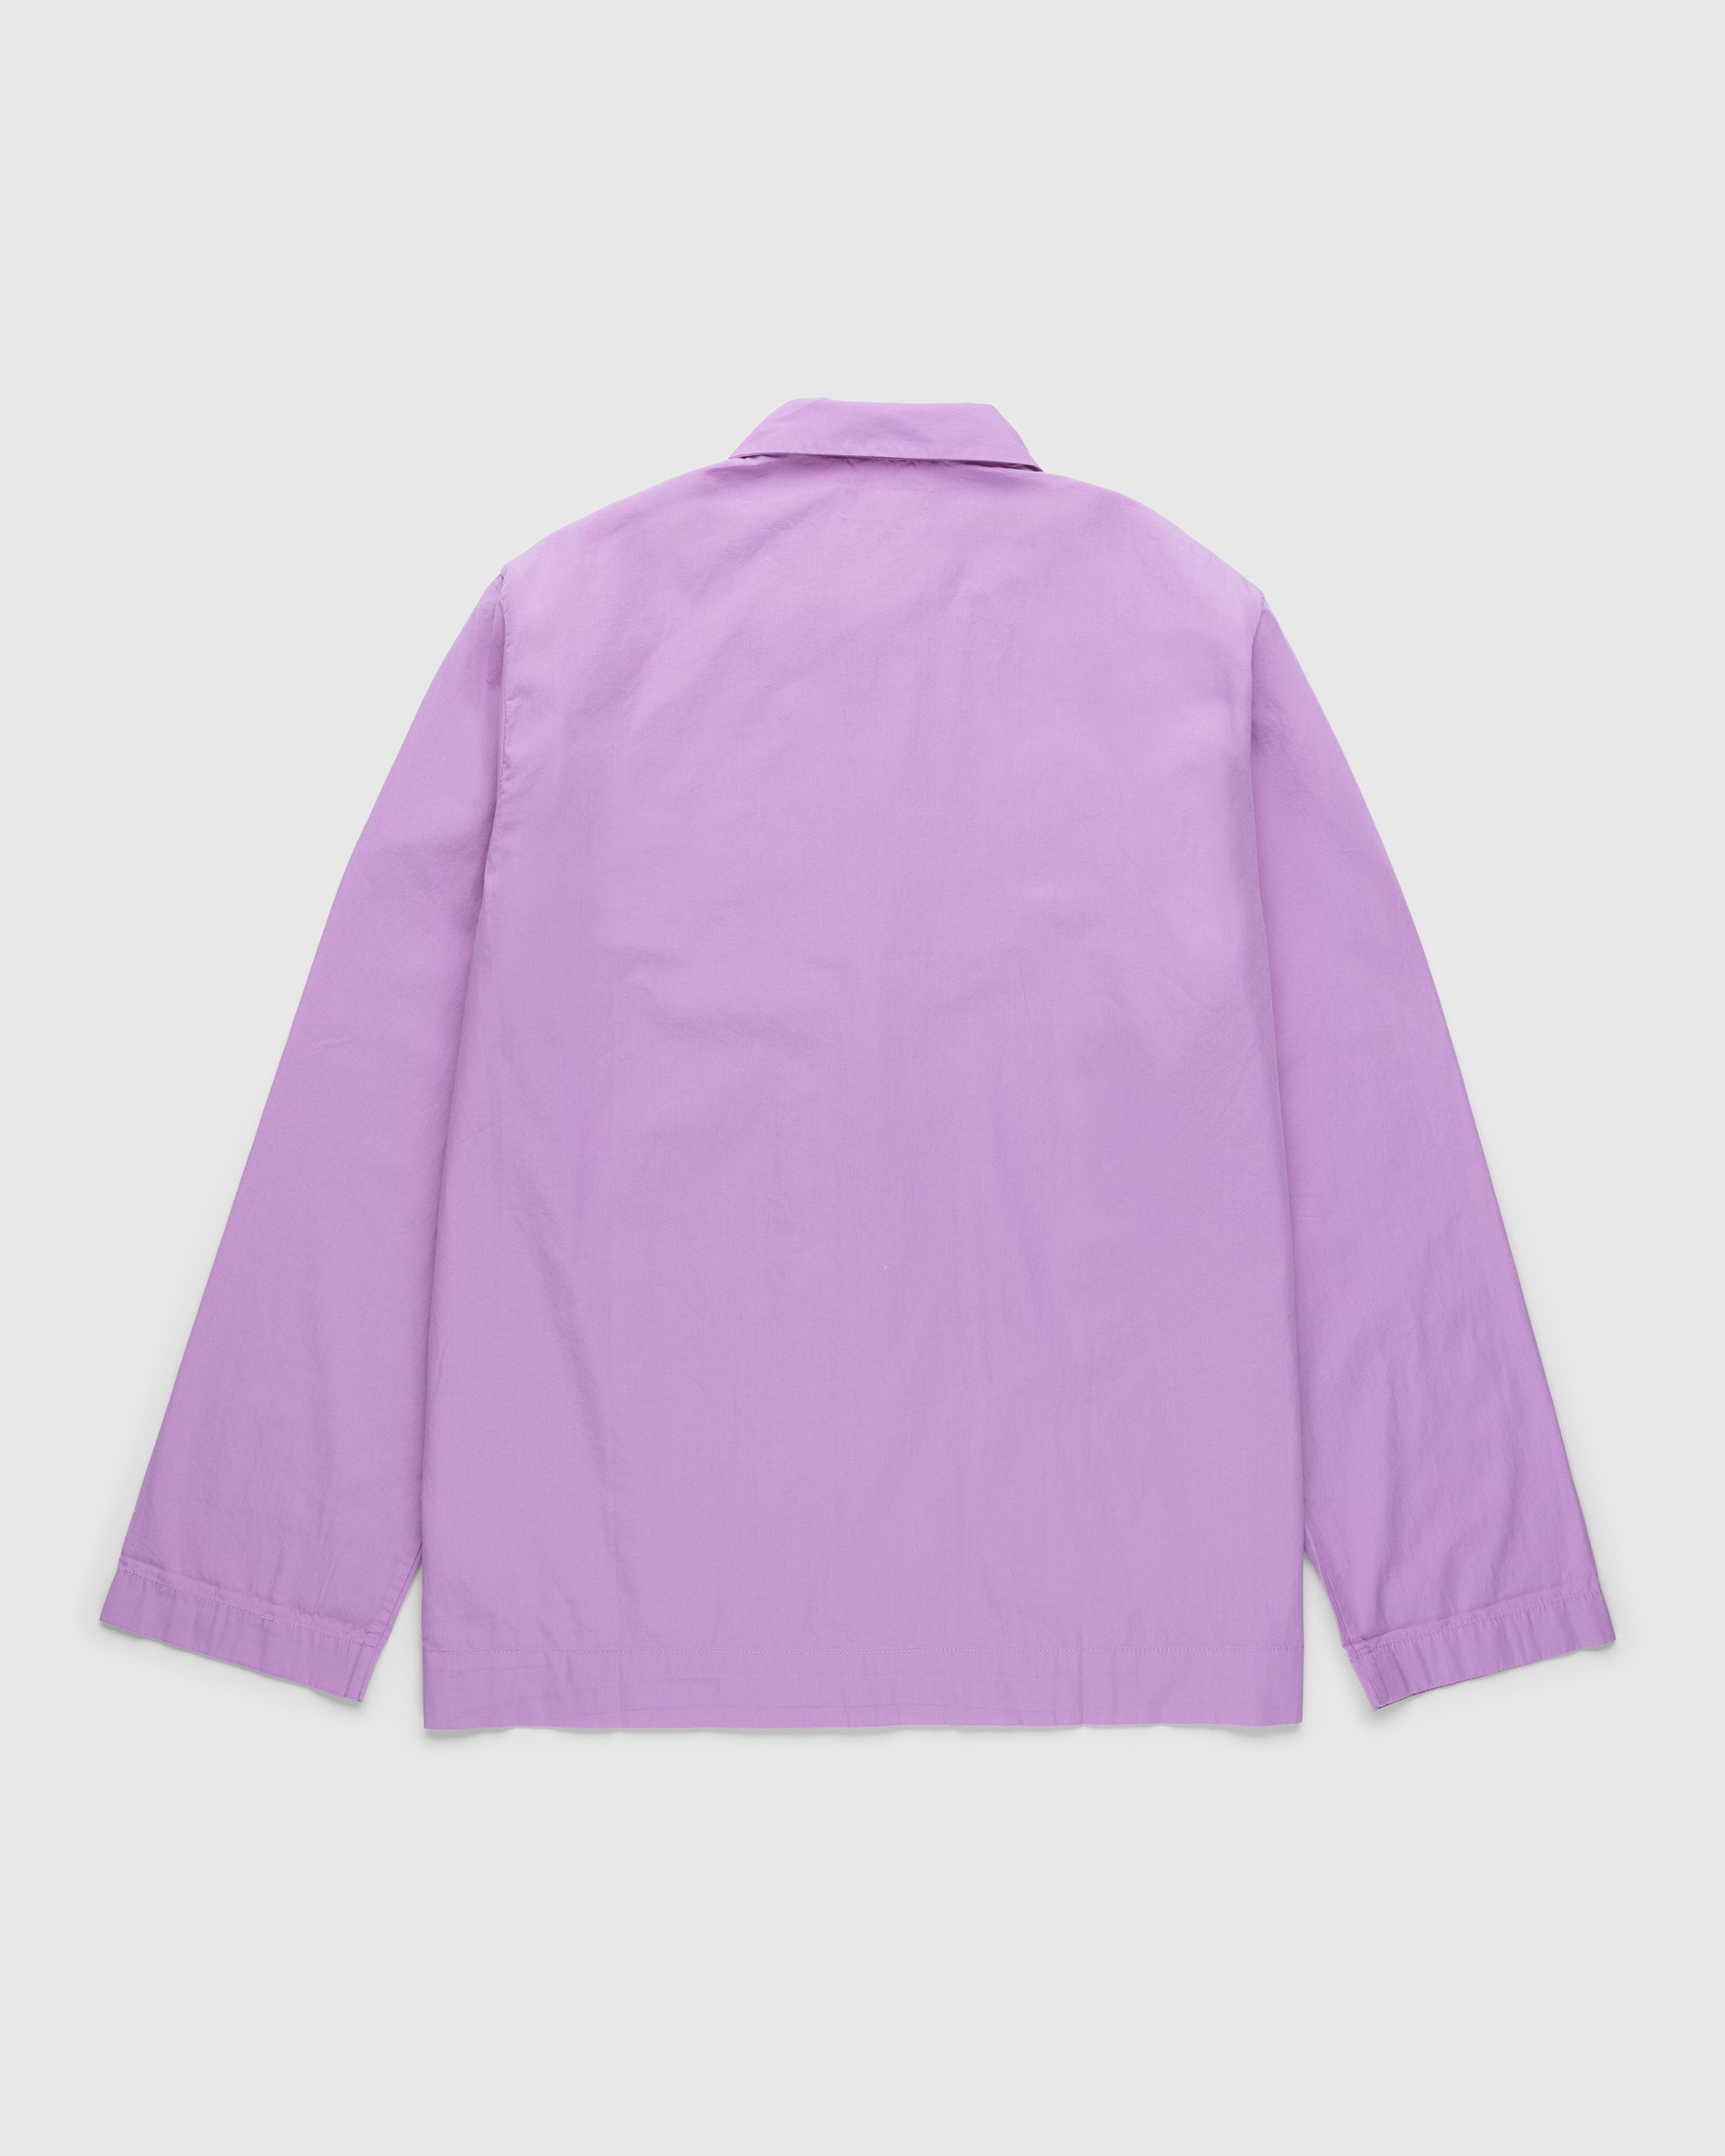 Tekla - Cotton Poplin Pyjamas Shirt Purple Pink - Clothing - Pink - Image 2